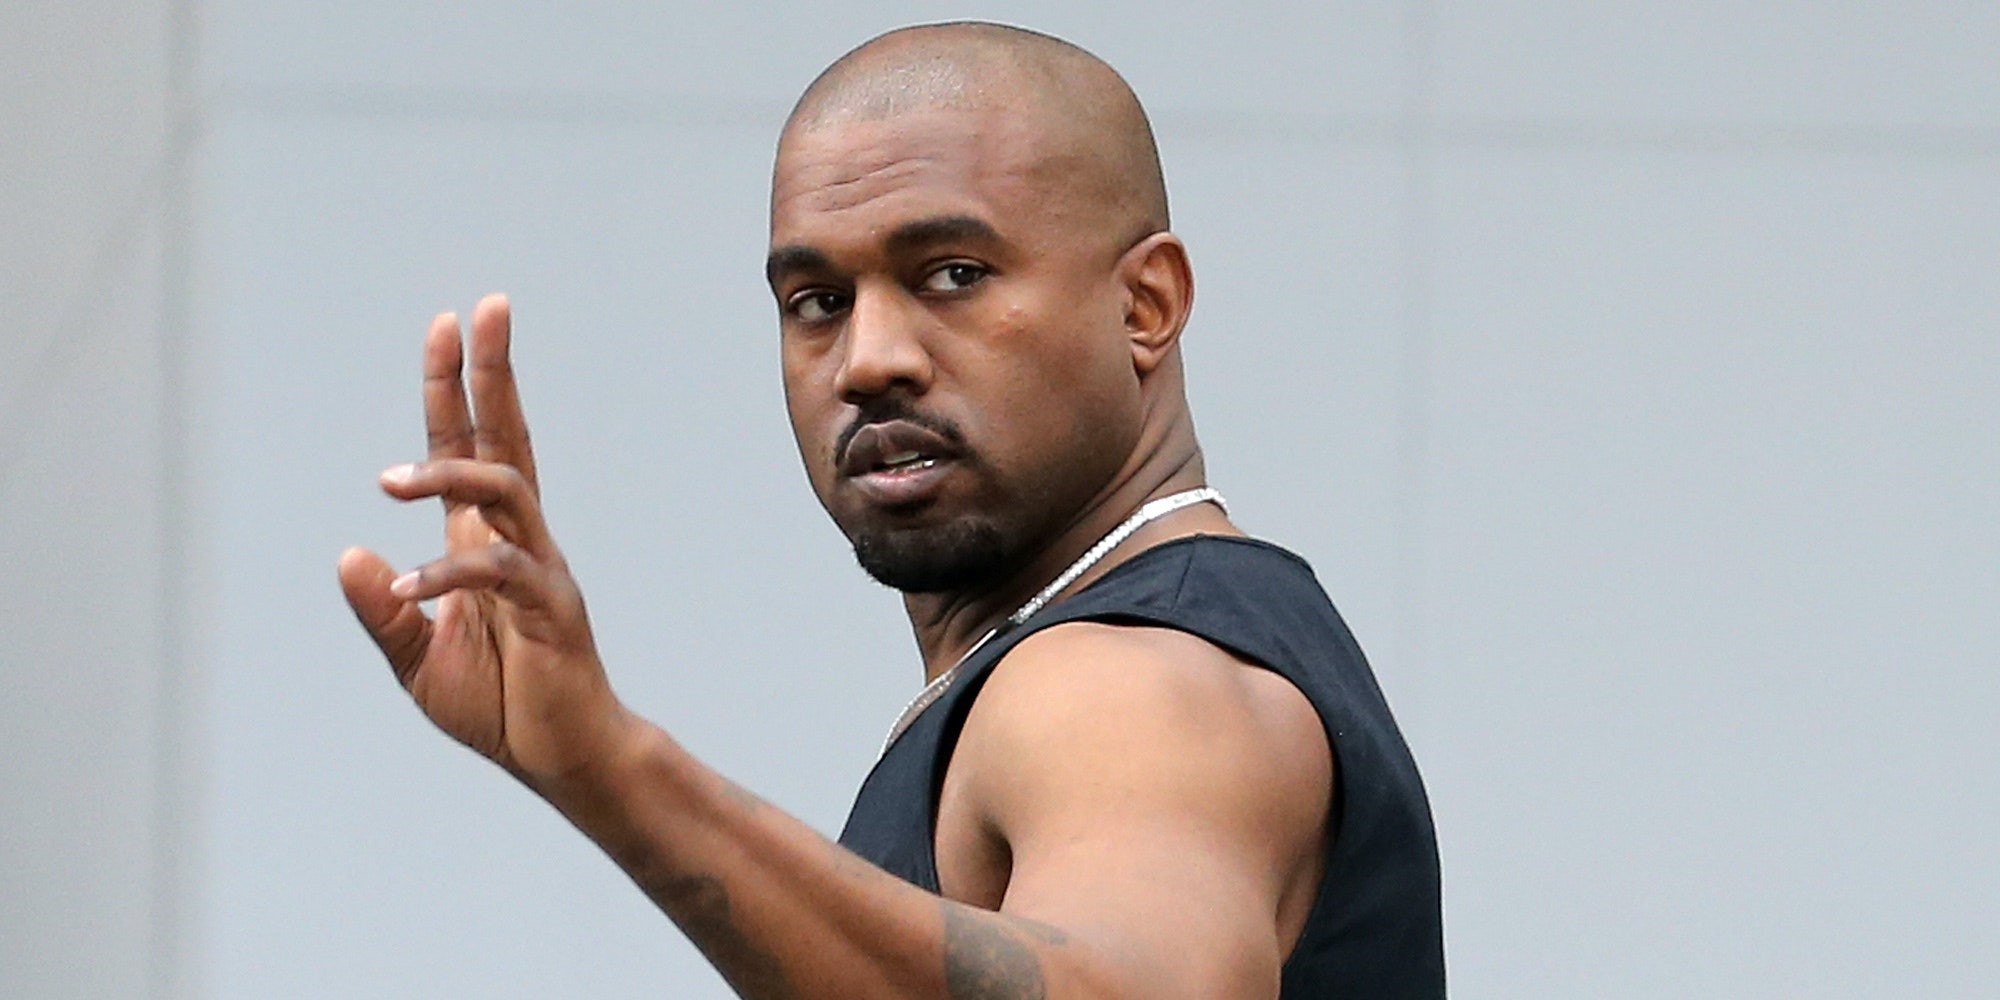 Kanye West drops out of headlining Coachella 2022